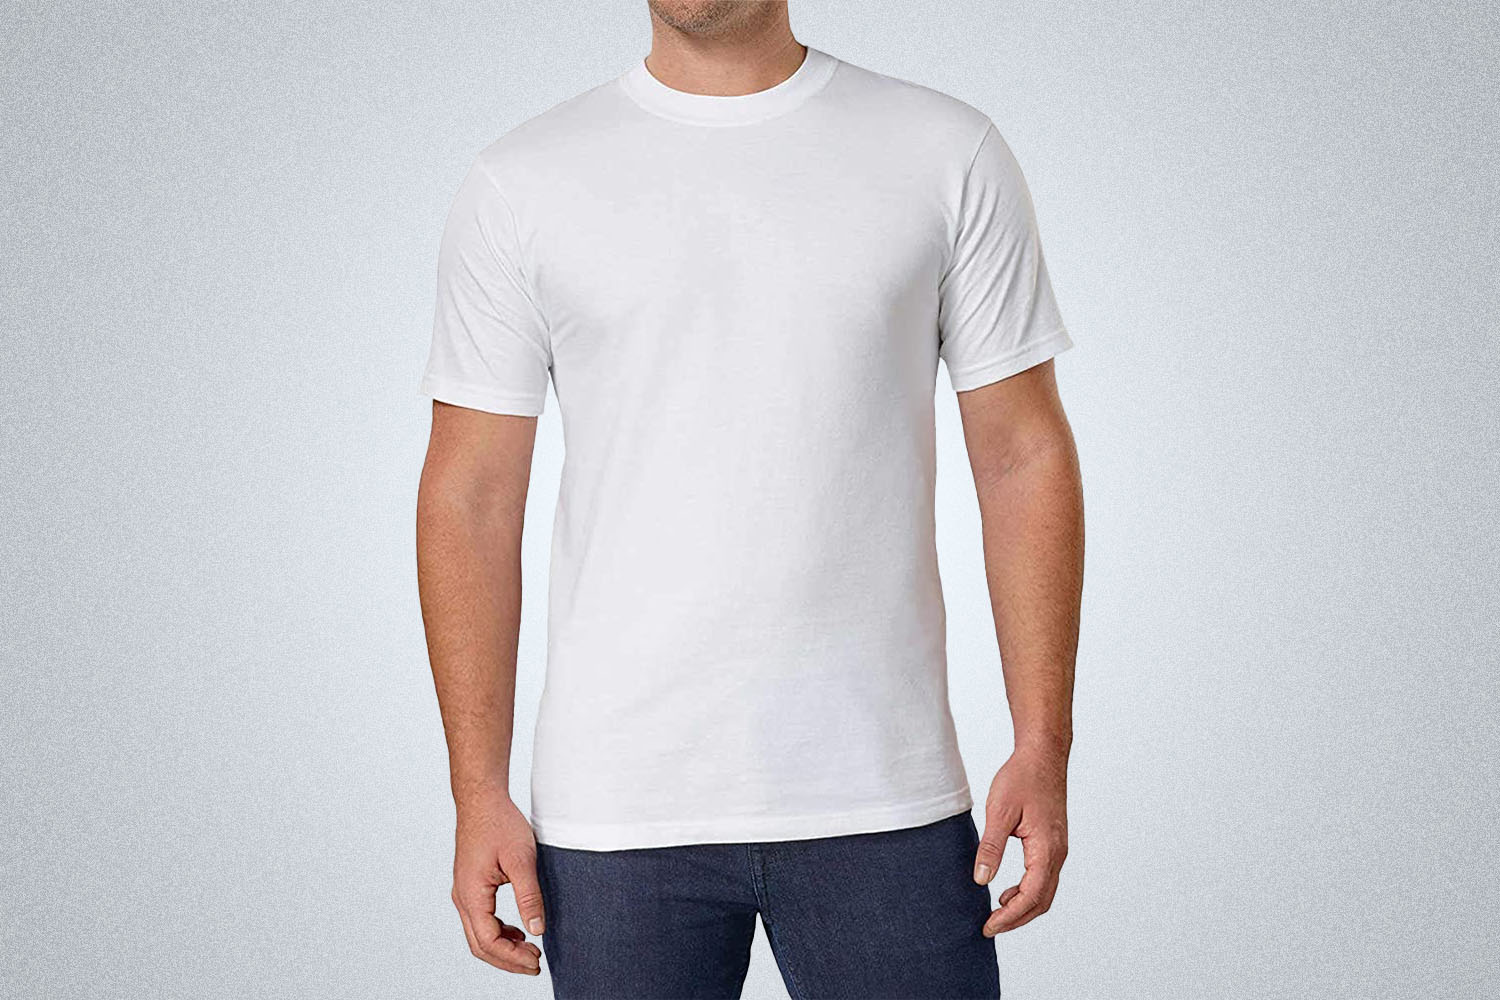 Kirkland Signature 100% Cotton Crew Neck T-Shirt (6-Pack)